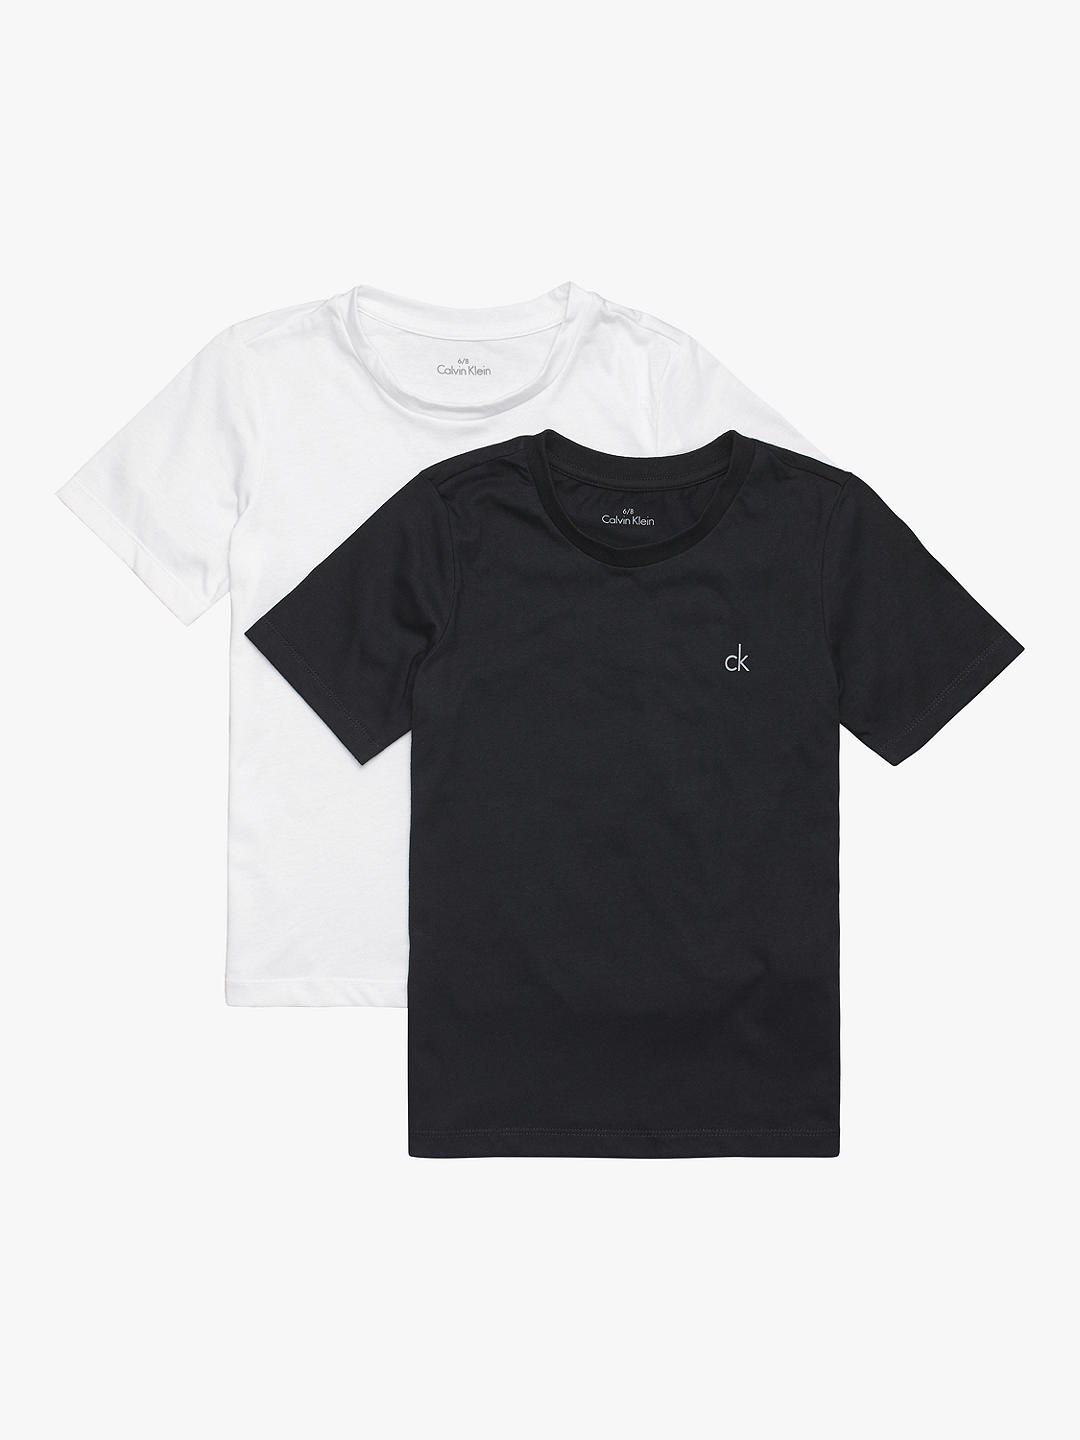 Calvin Klein Kids' Short Sleeve T-Shirts, Pack of 2, White/Black